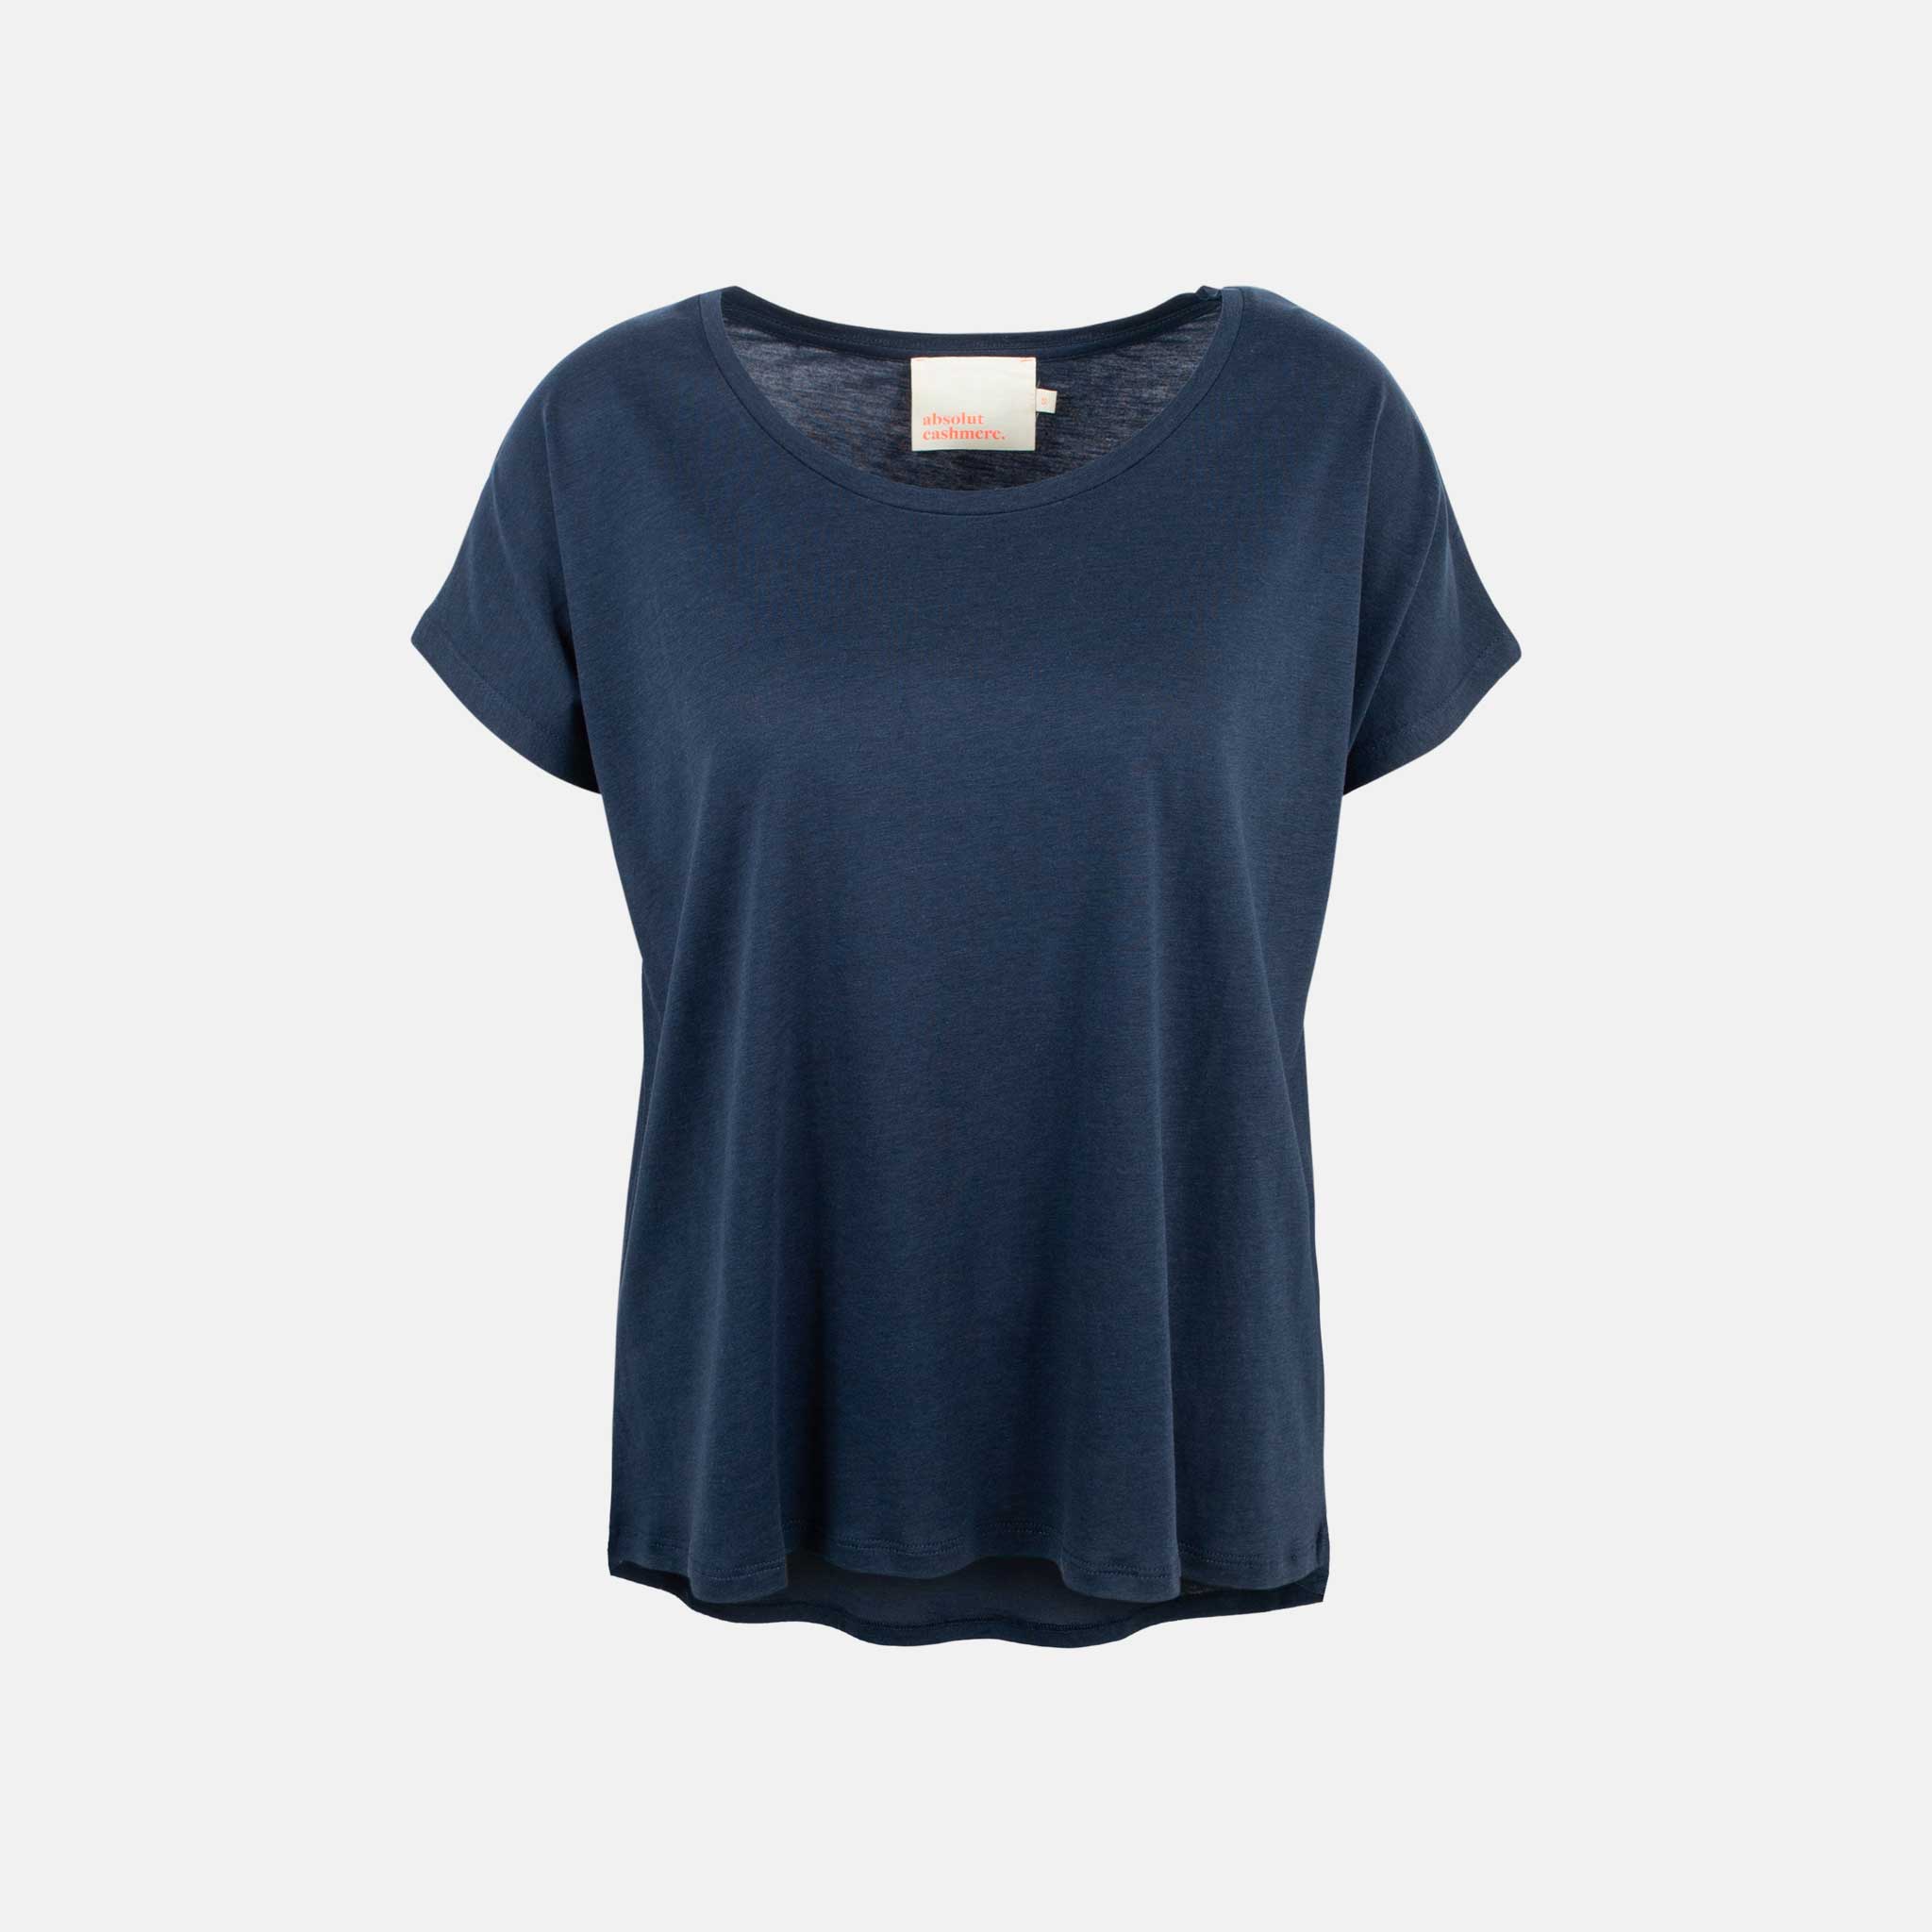 Absolut Cashmere Shirt Elise vorne | nachtblau